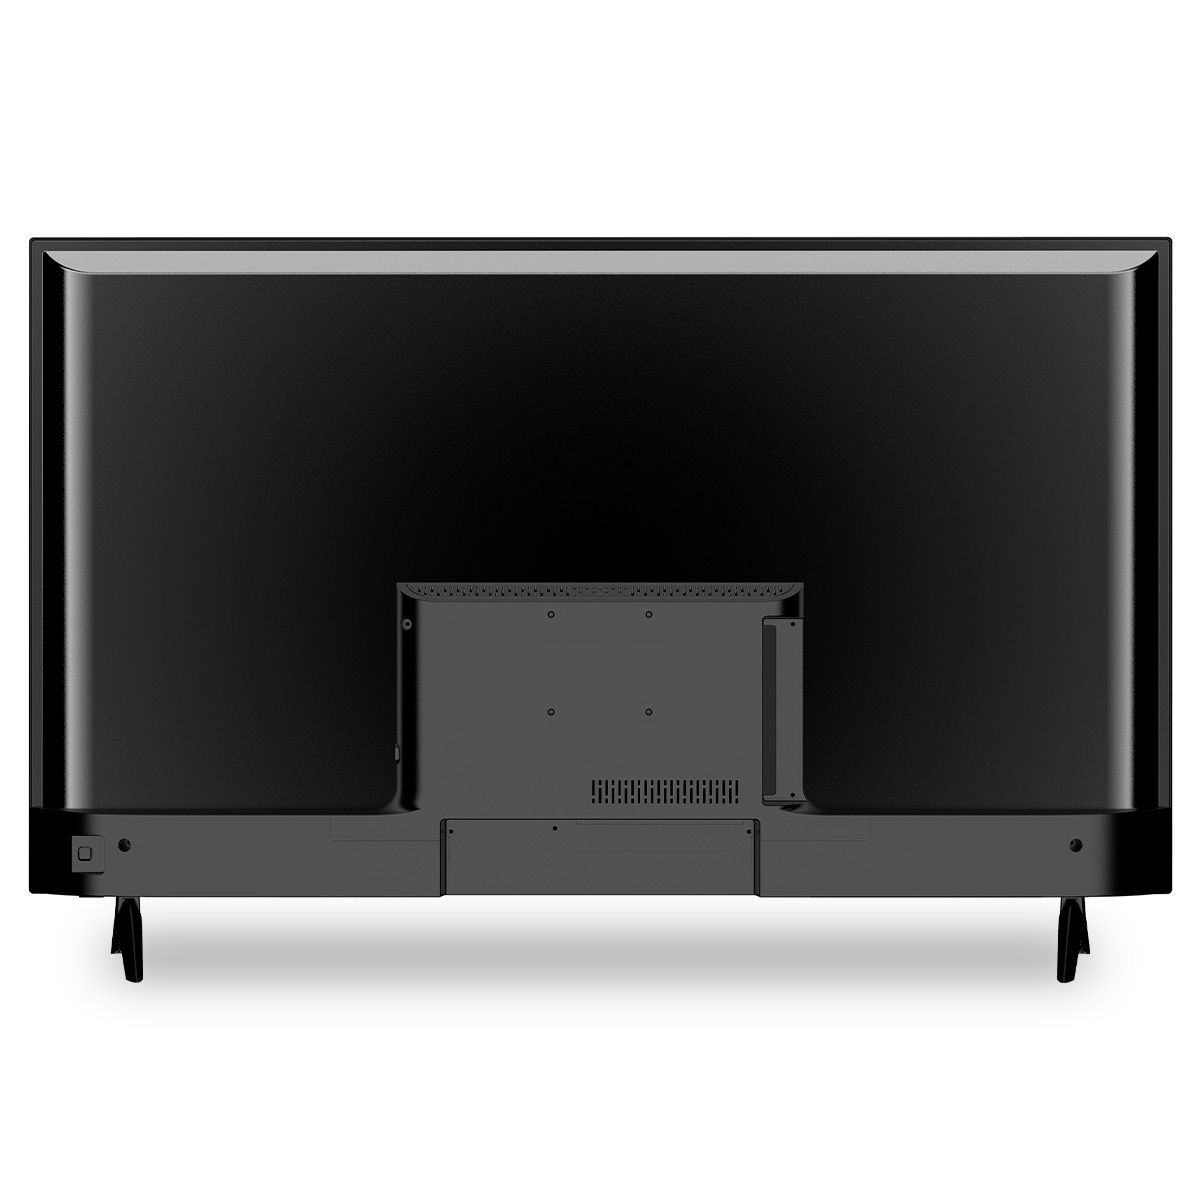 Pantalla JVC Smart Roku TV SI40FR 40 pulg. Led HD, ¡Outlet!, Todas, Categoría